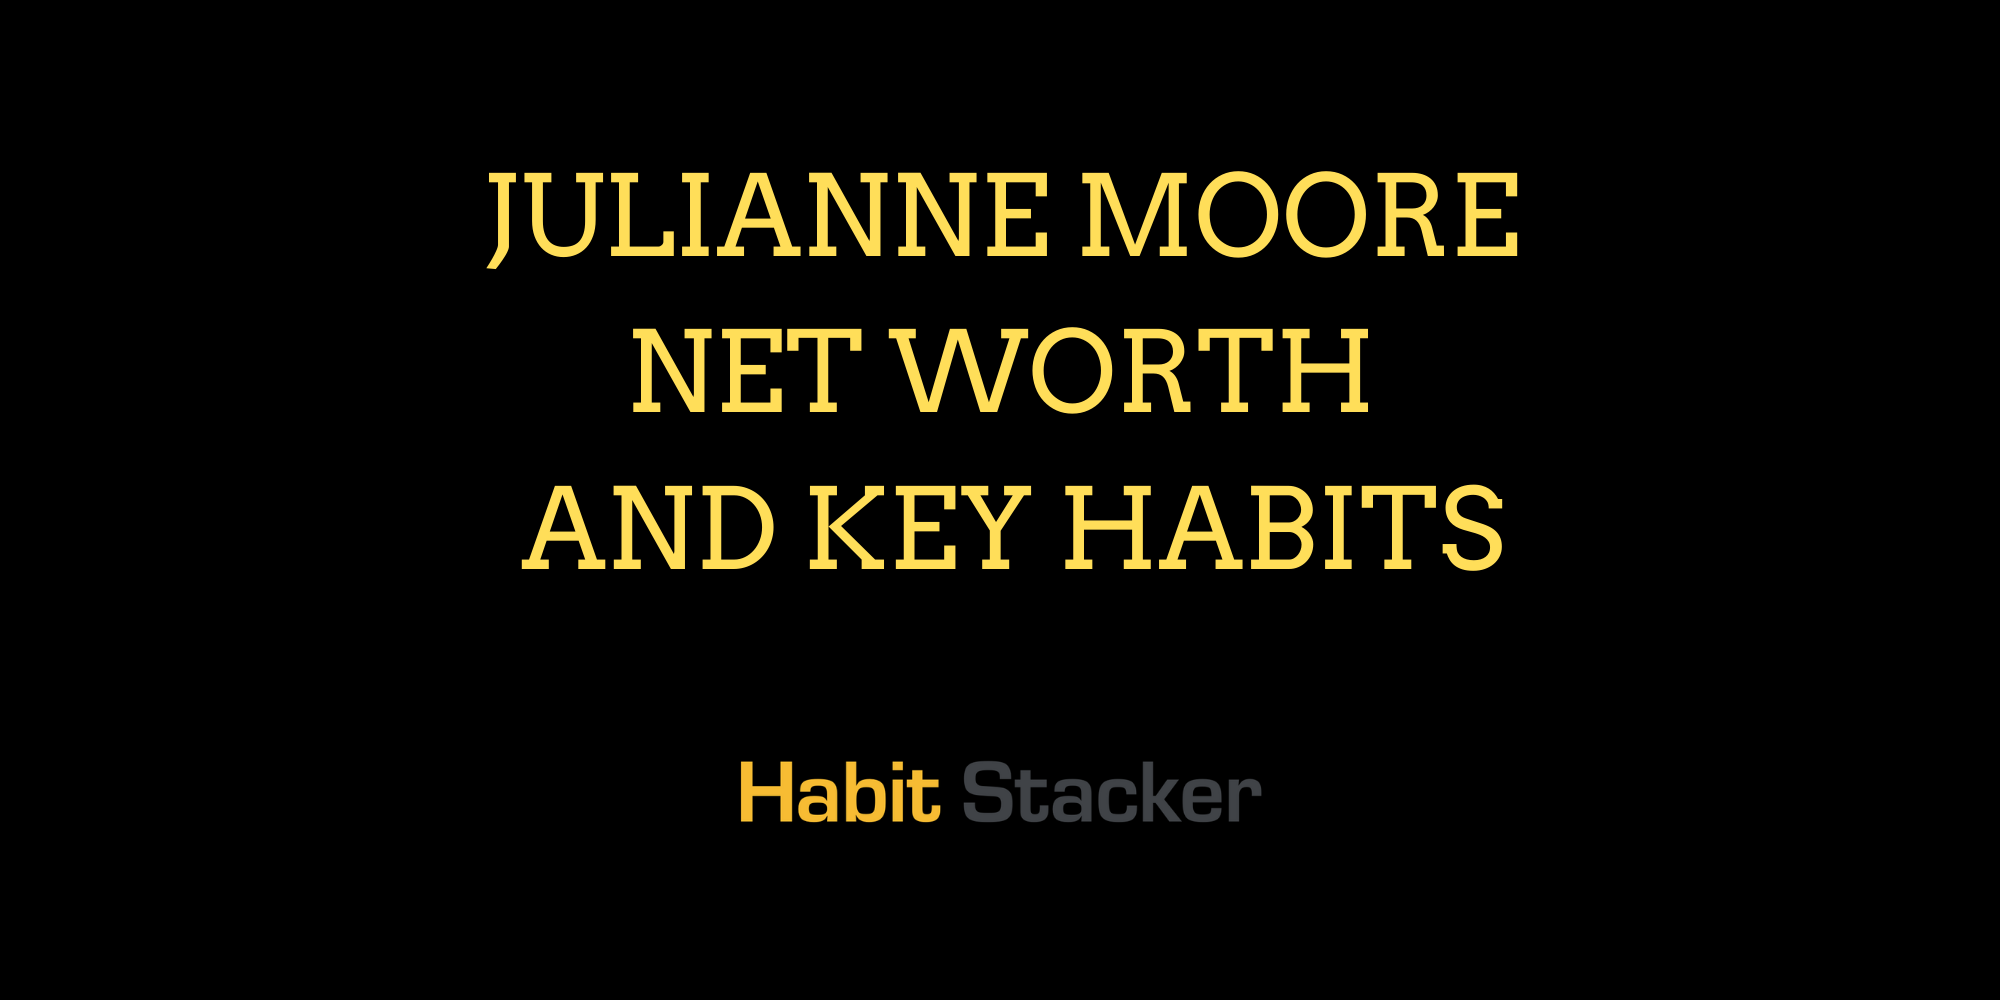 Julianne Moore Net Worth and Key Habits